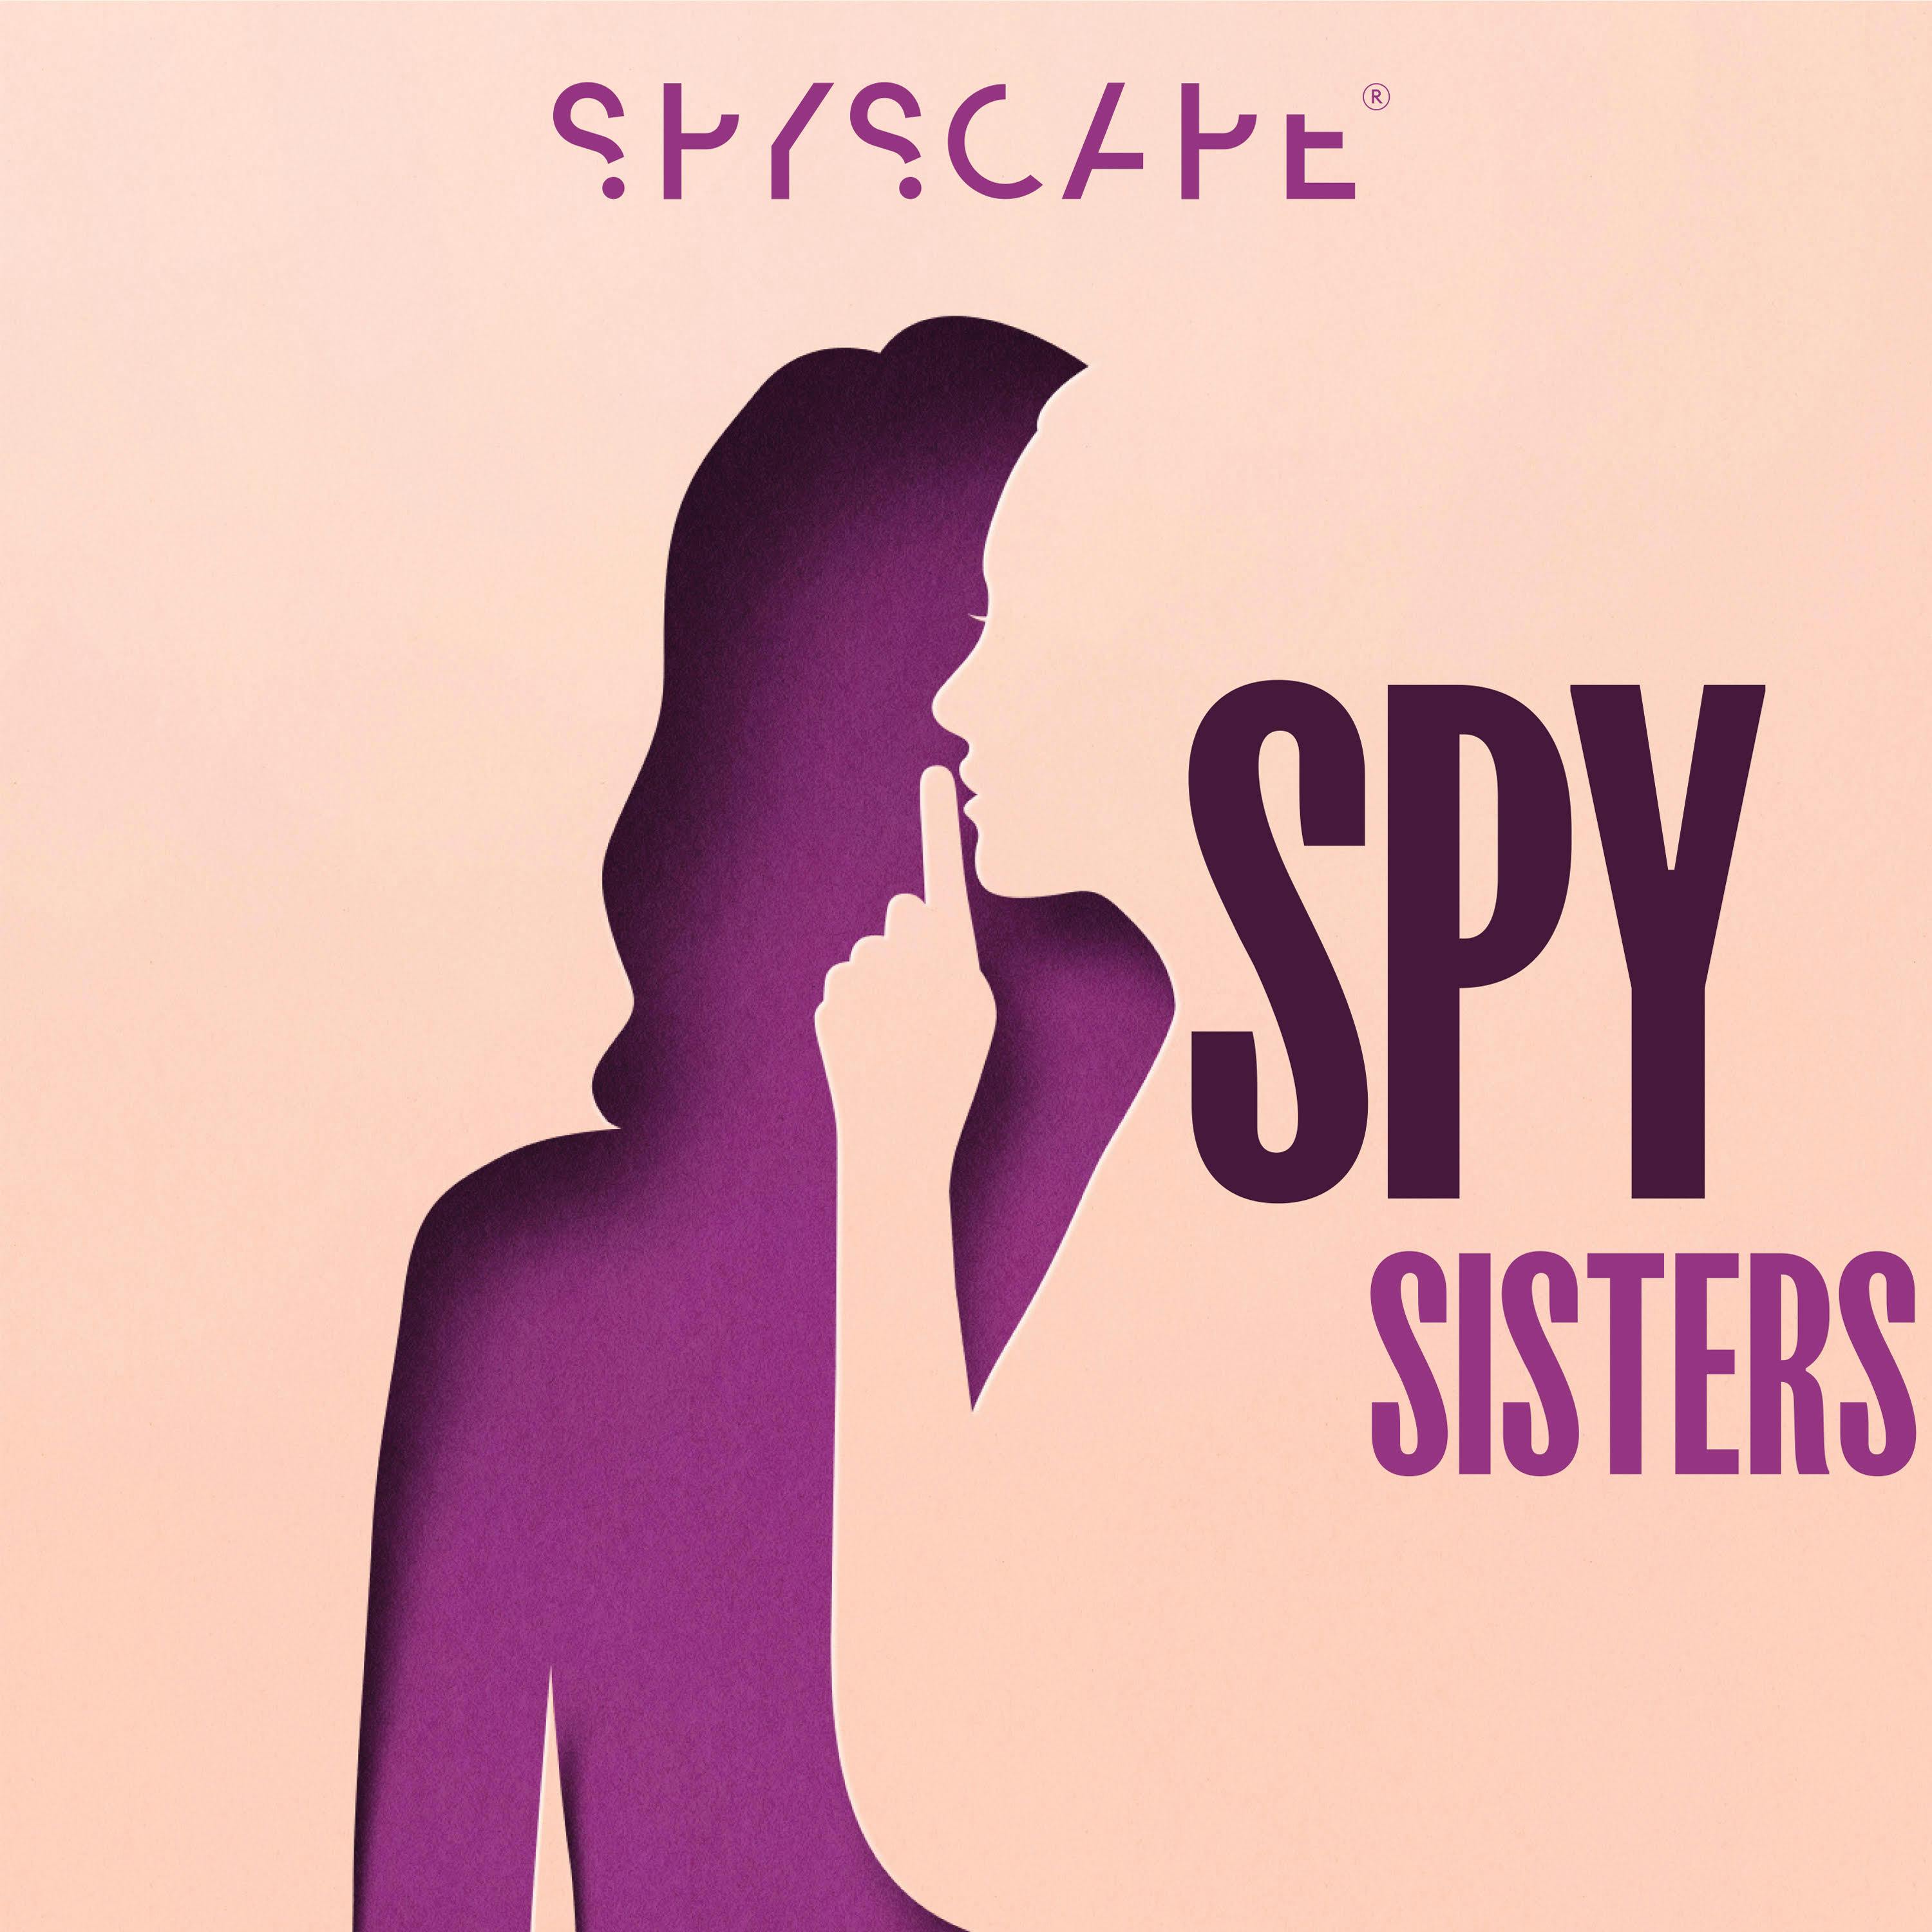 Sister Spies